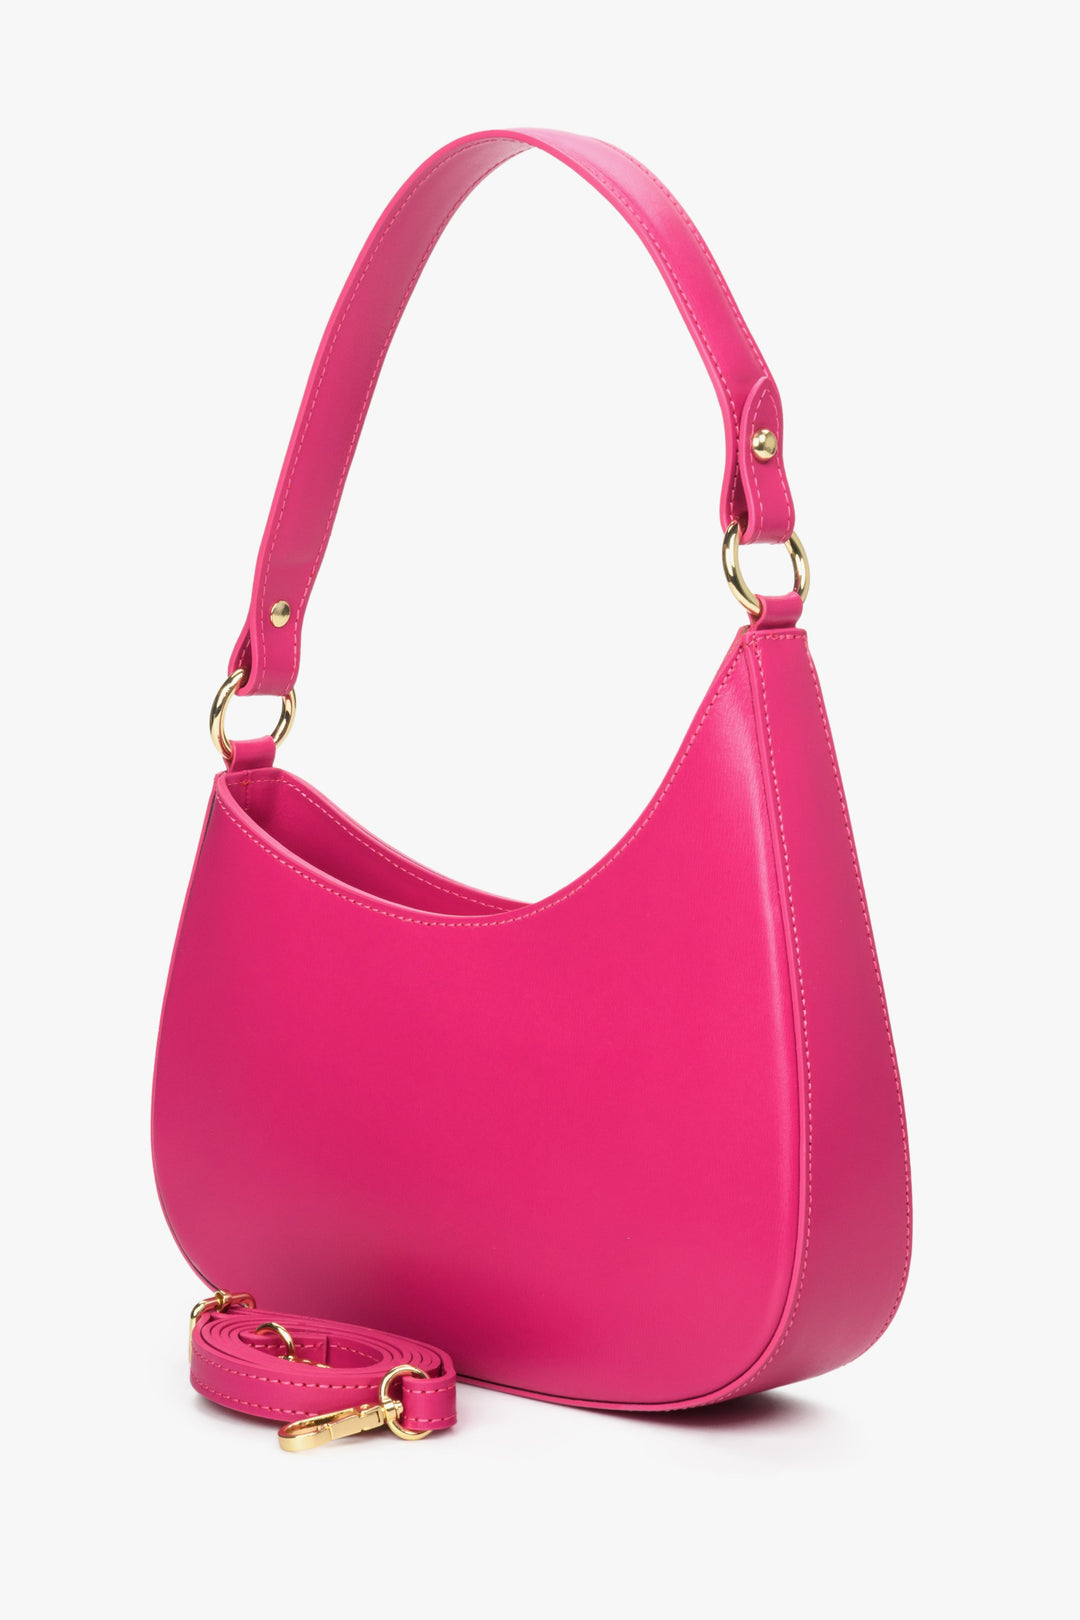 Women's pink Estro shoulder bag with detachable strap.